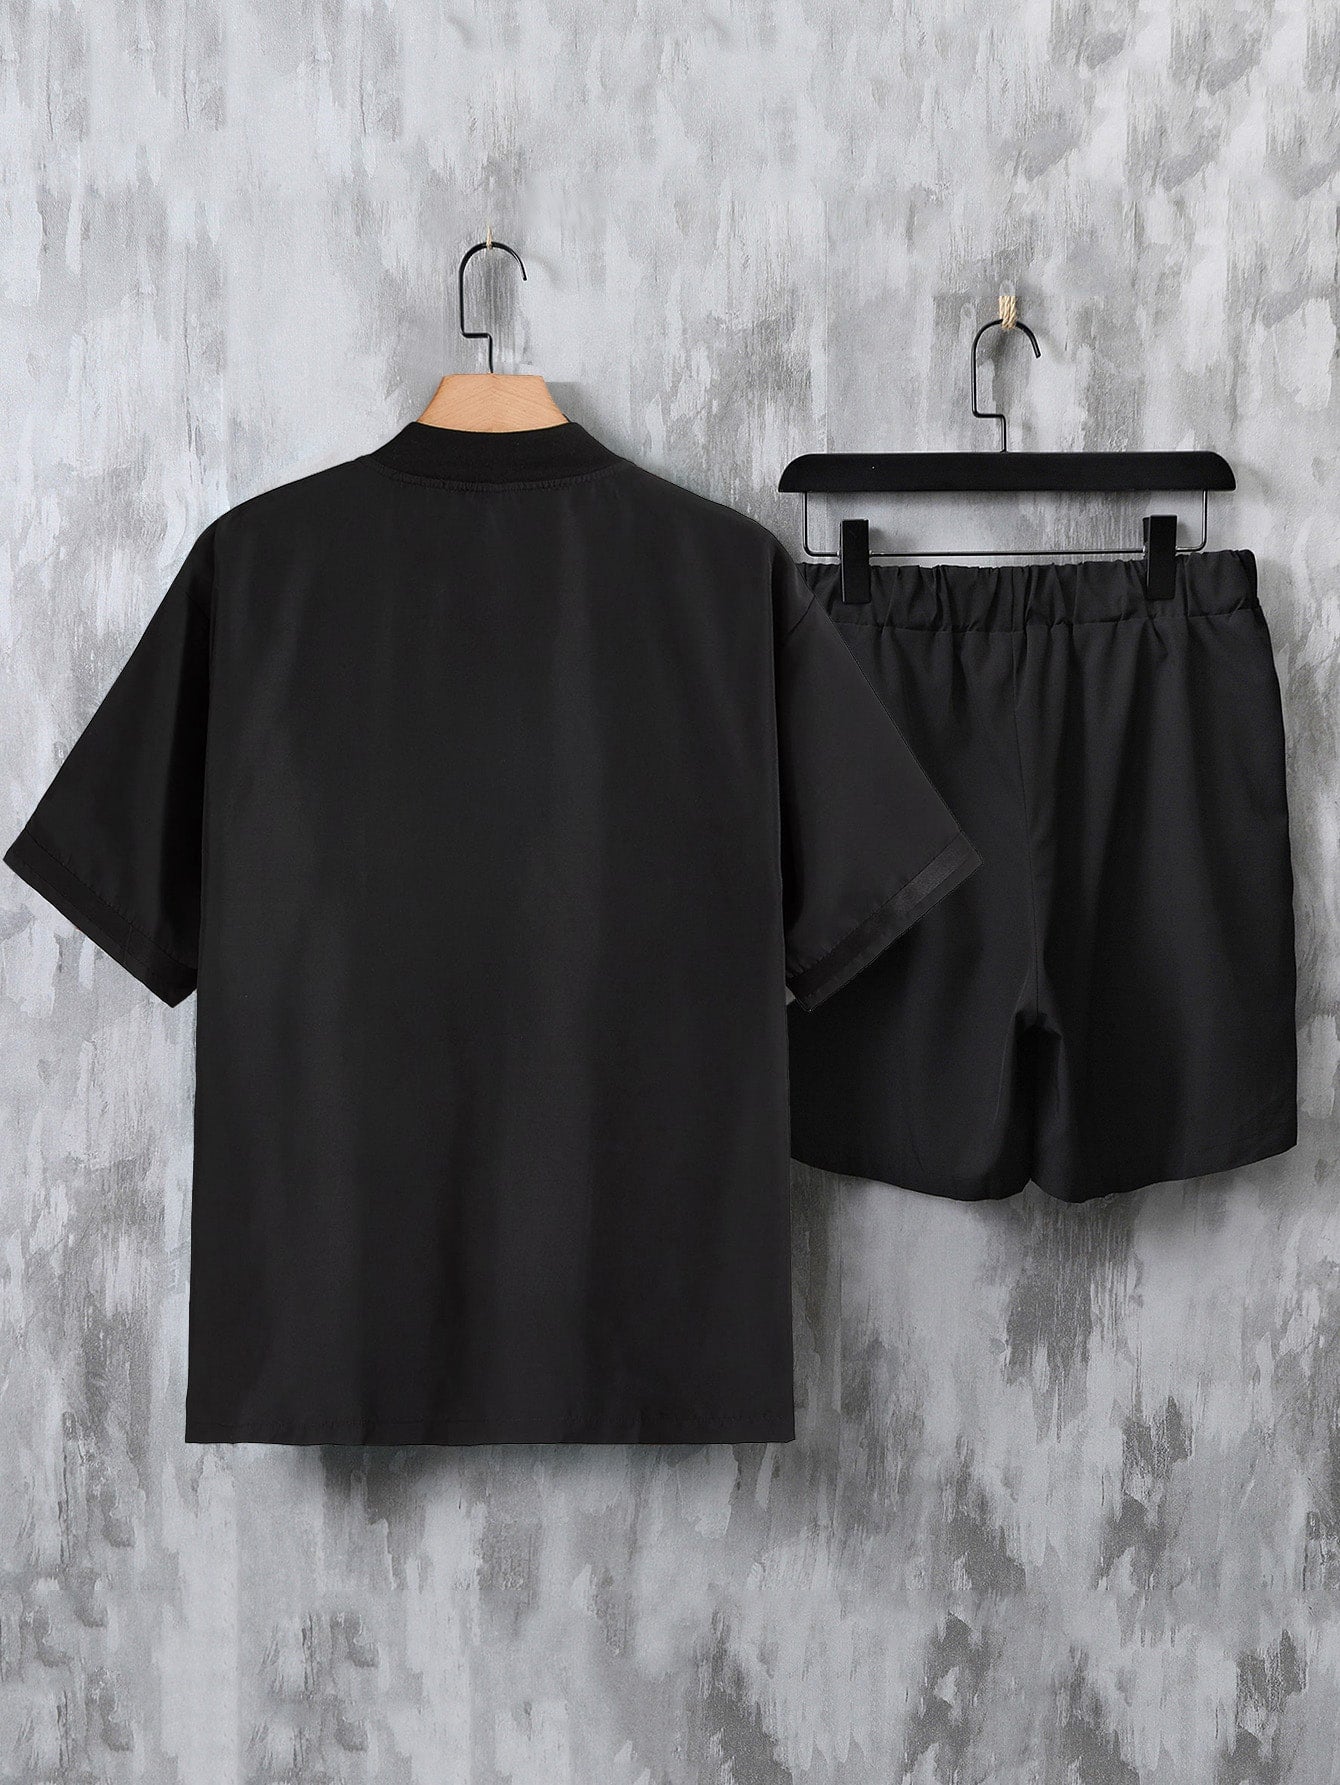 ARAKAR Sporty Loose Fit Men's Graphic Baseball Collar Shirt & Drawstring Waist Shorts (Without Tee)